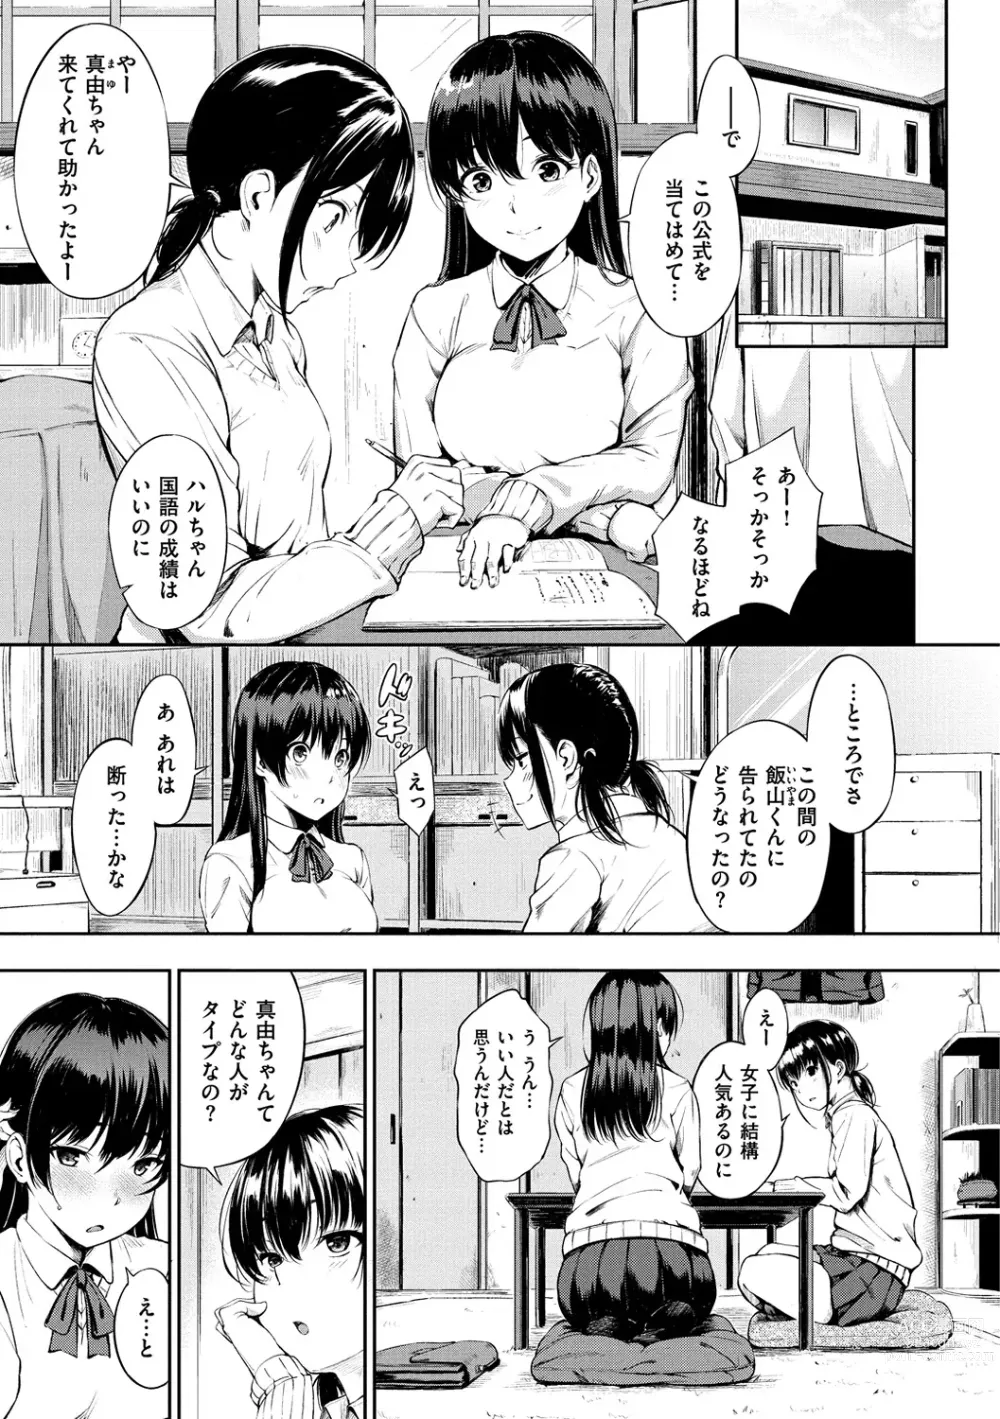 Page 12 of manga Oyatsu no Jikan + 8P Leaflet